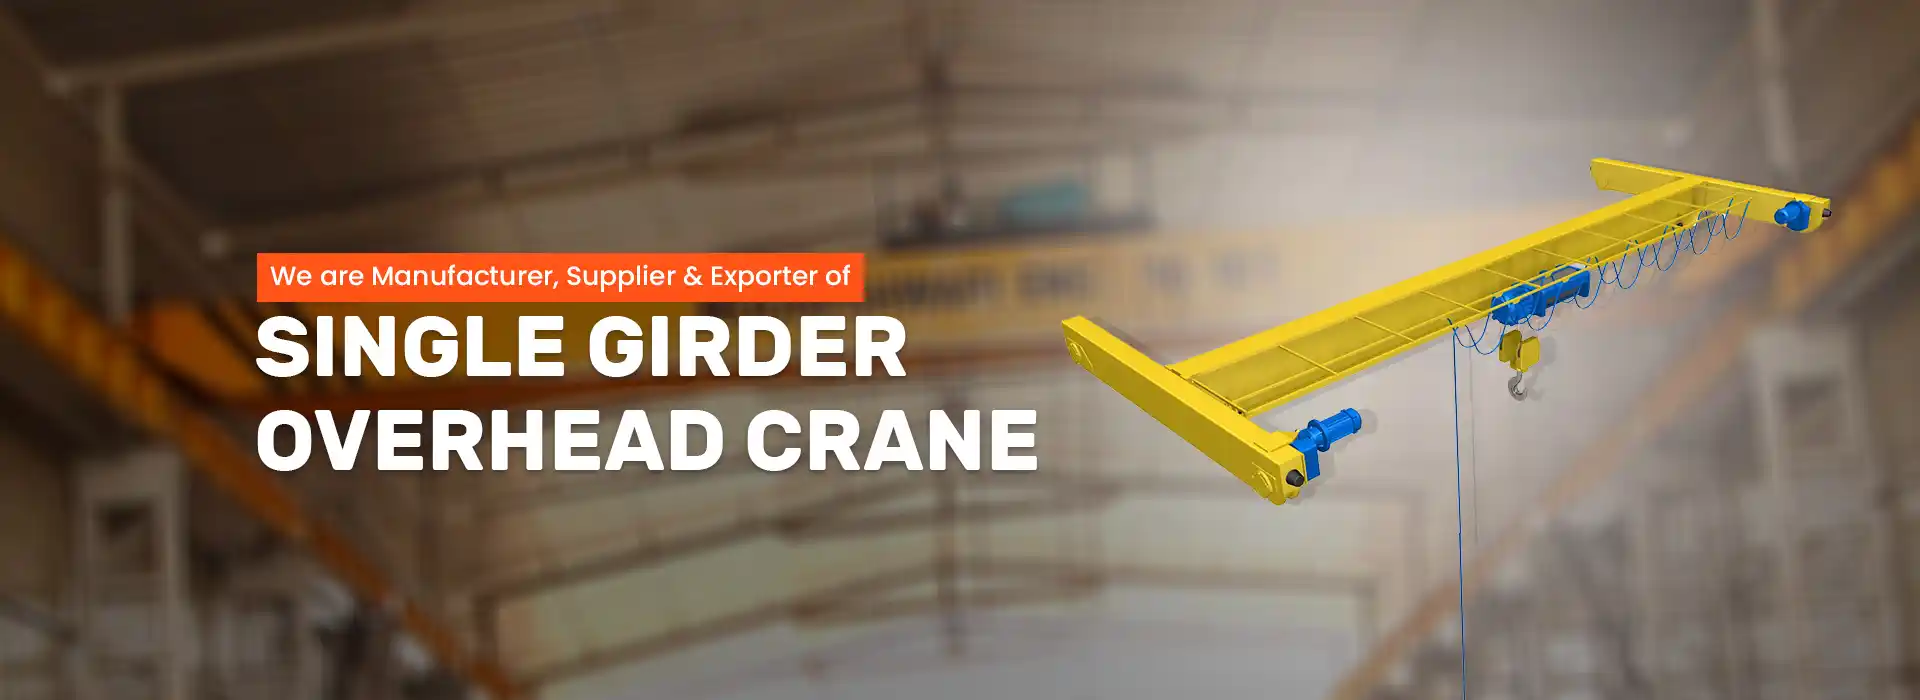 crane manufacturers in india, gujarat, ahmedabad